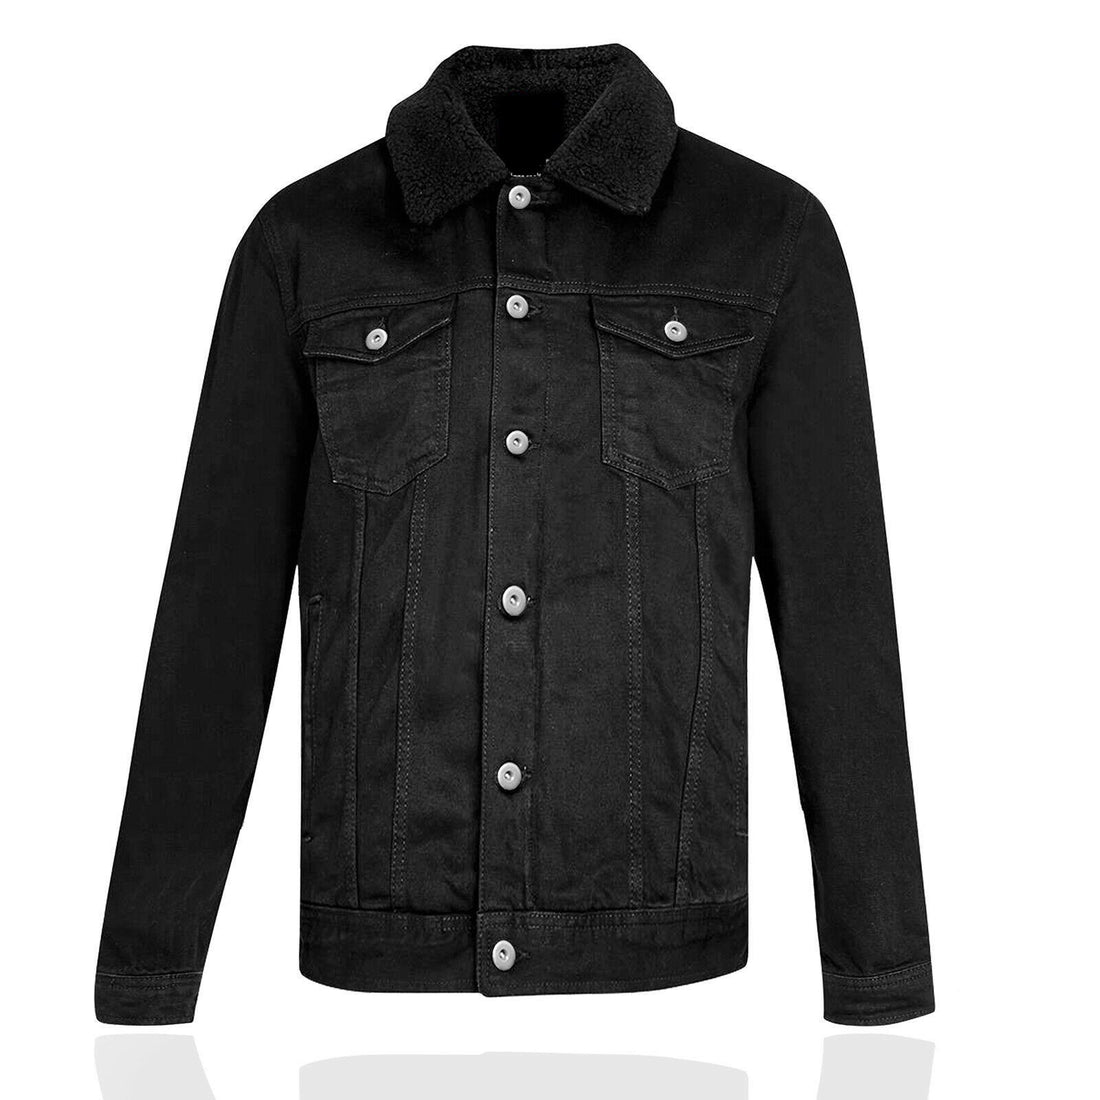 Mens Denim Jacket 100% Cotton Button Up Classic Jean Casual Store S - 3XL Black